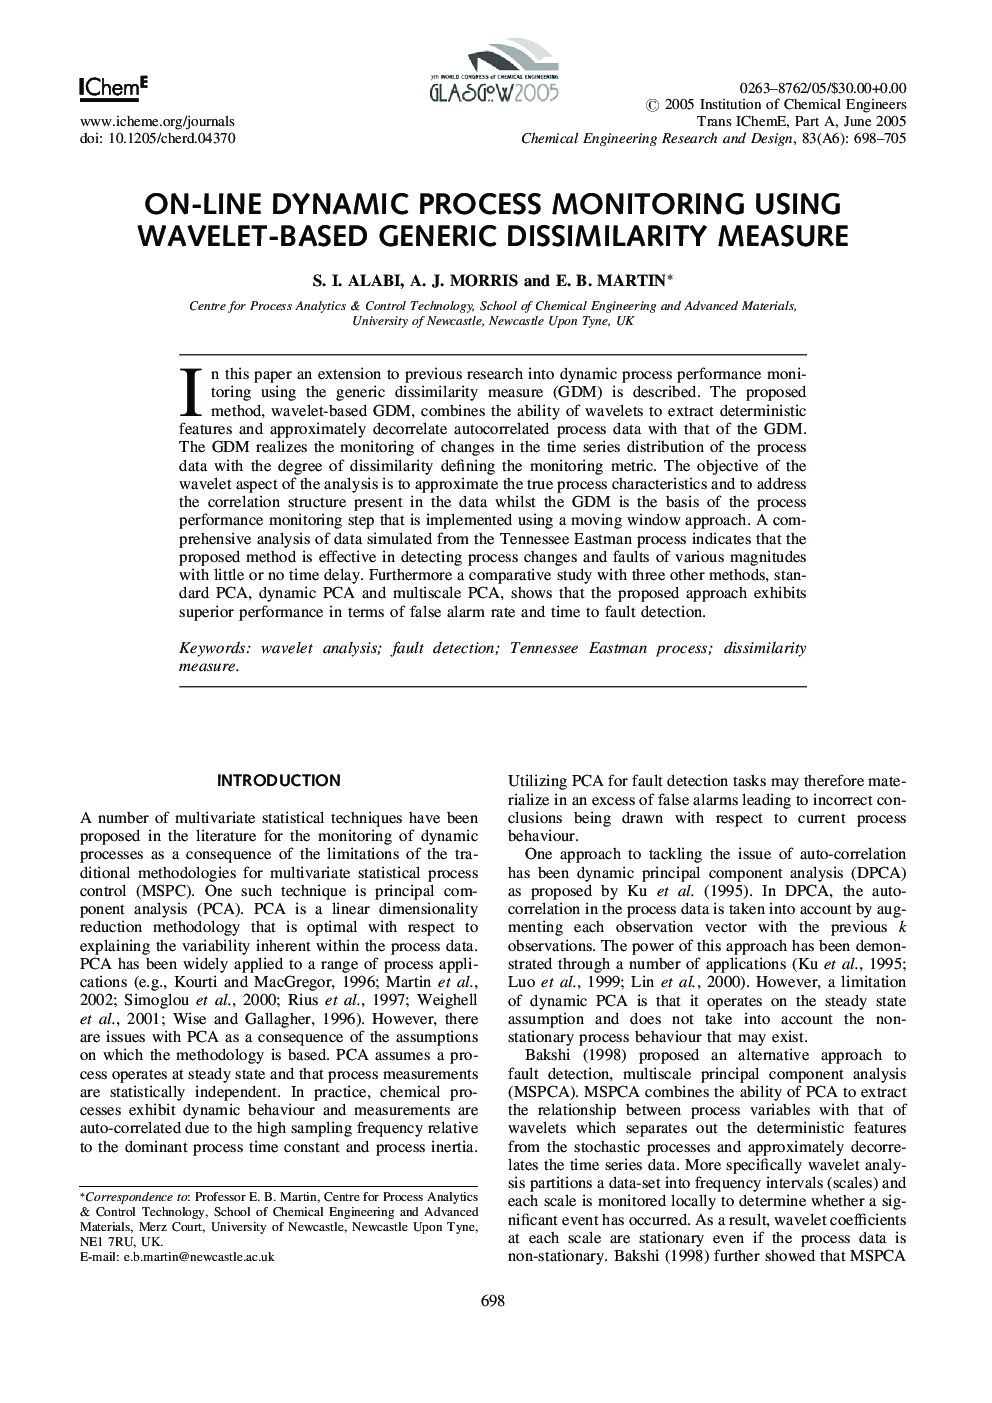 On-Line Dynamic Process Monitoring Using Wavelet-Based Generic Dissimilarity Measure